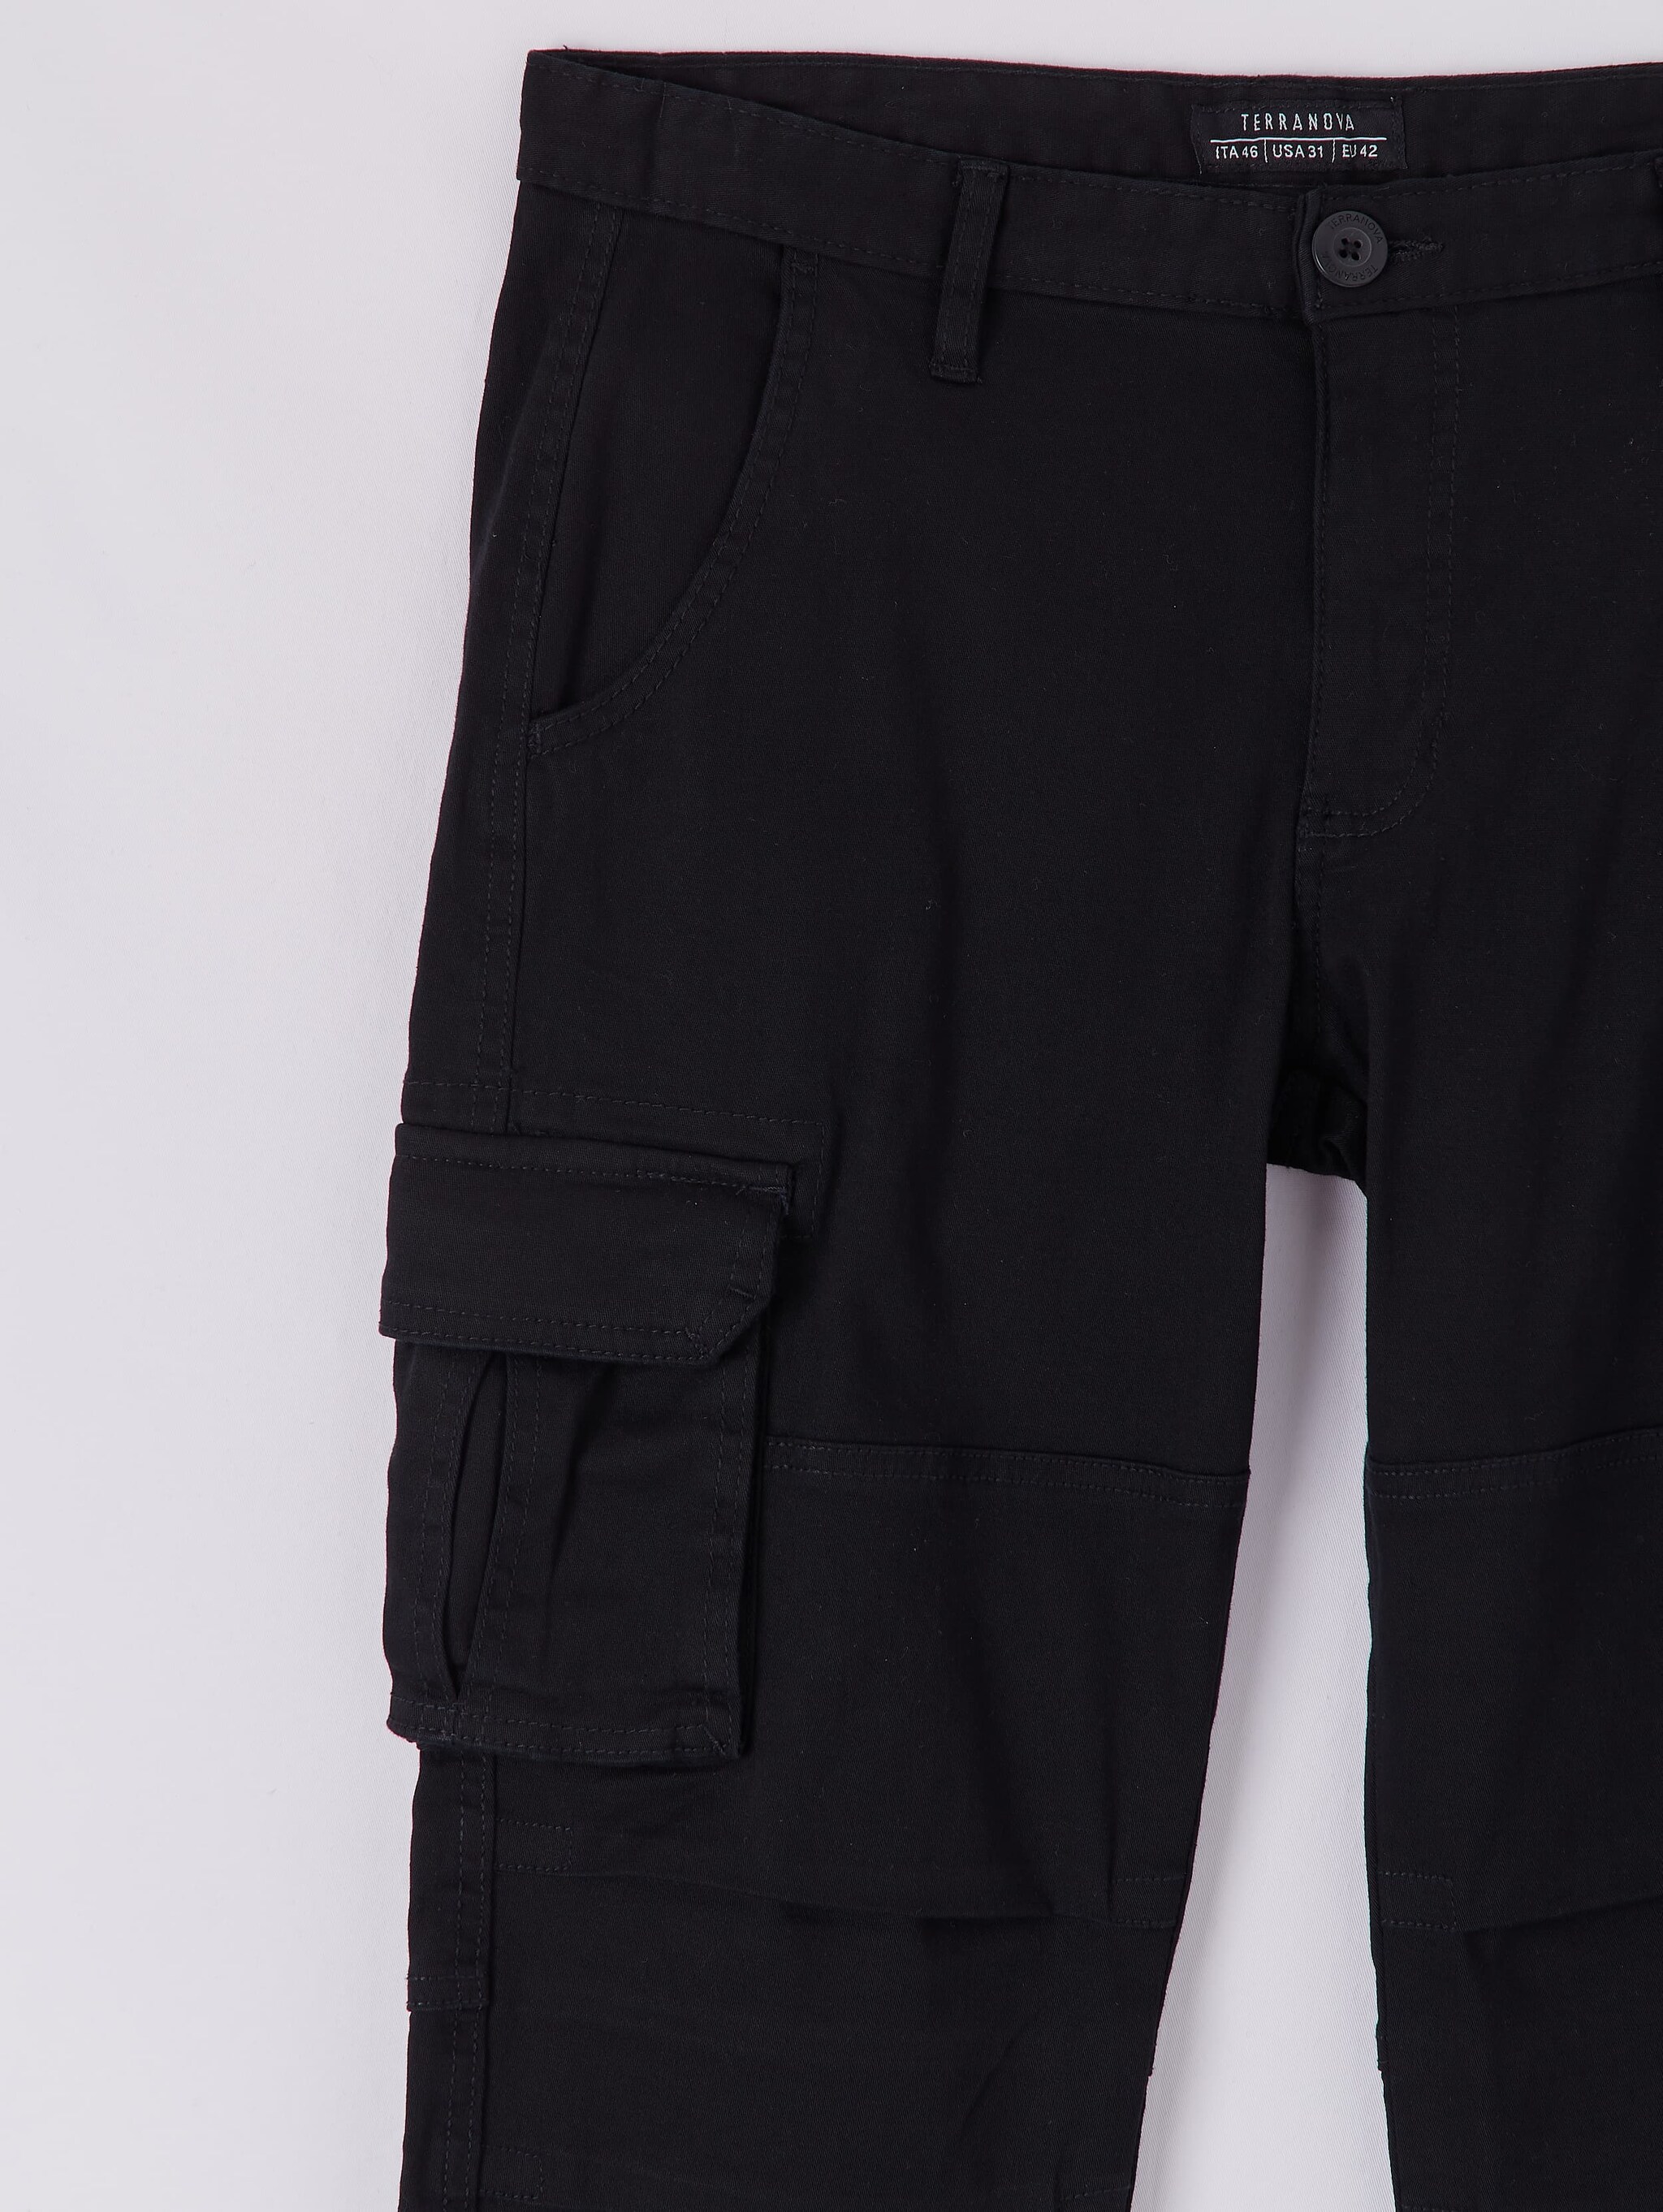 long black cargo pants